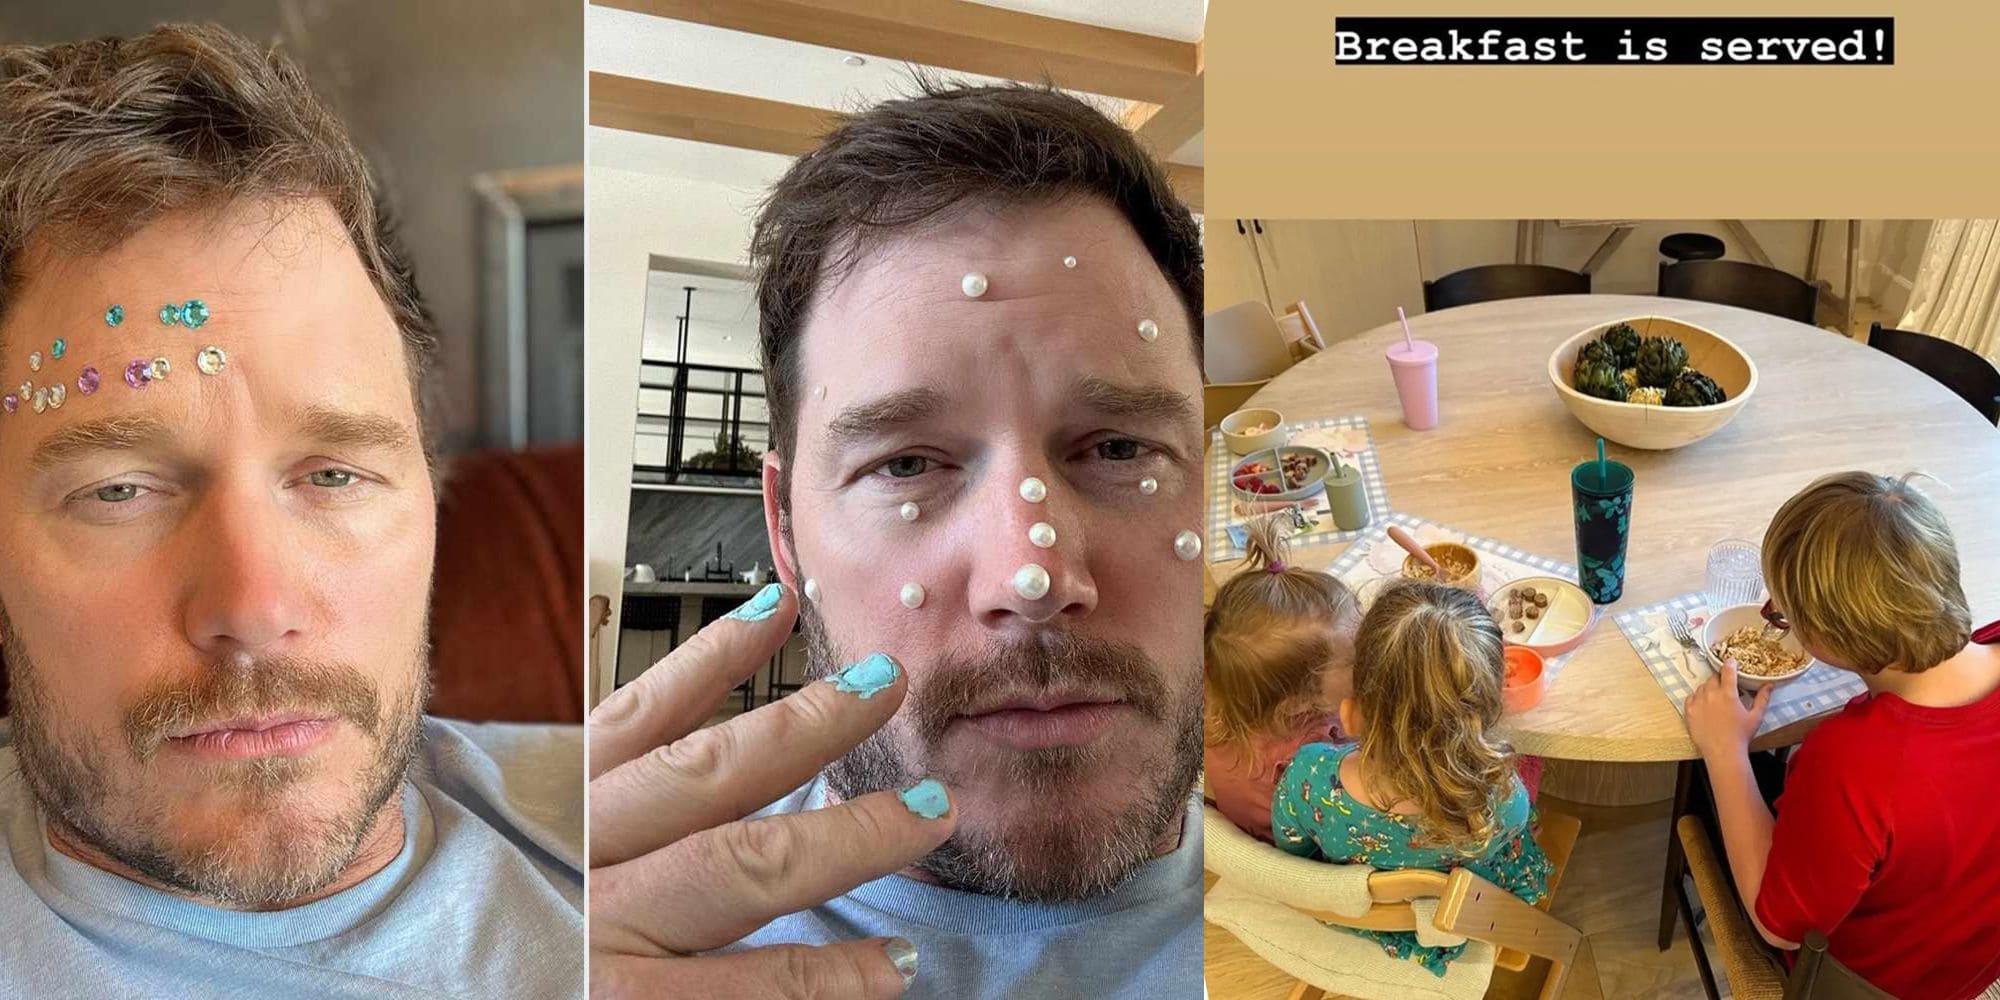 Chris Pratt Reveals a Rare Snapshot Featuring His Entire Trio of Children: 'Breakfast is Served'